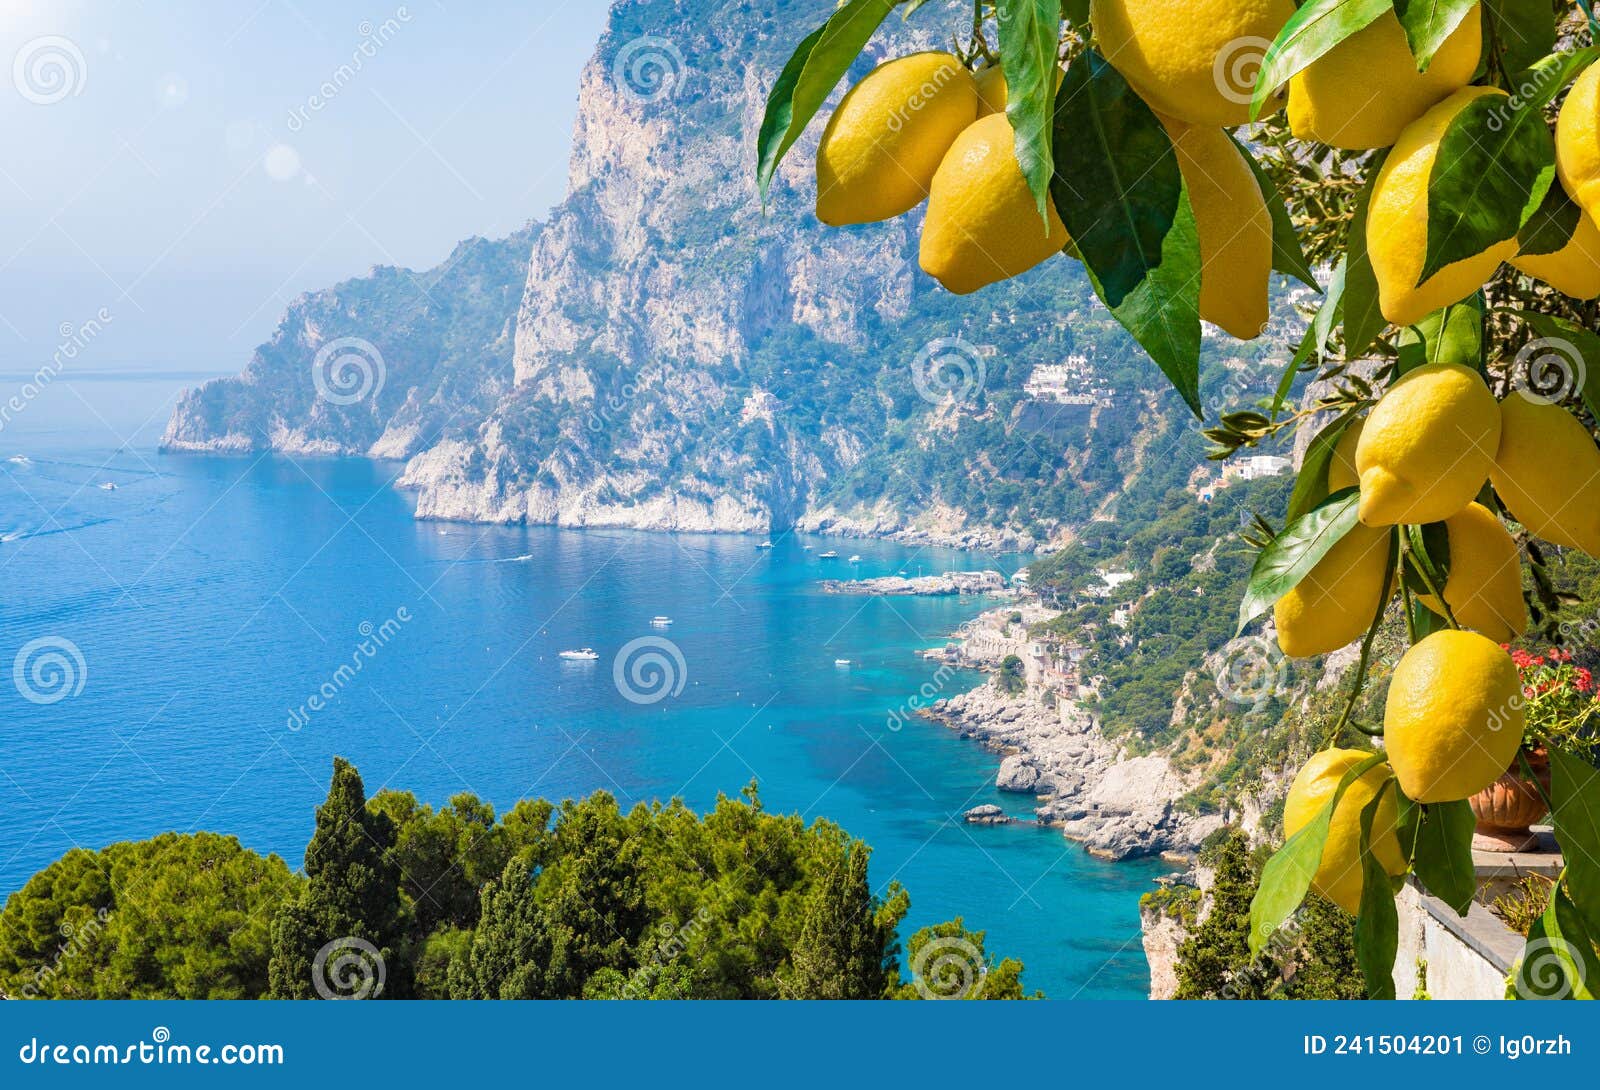 welcome to capri concept image. daylight view of marina piccola and monte solaro, capri island, italy. ripe yellow lemons in